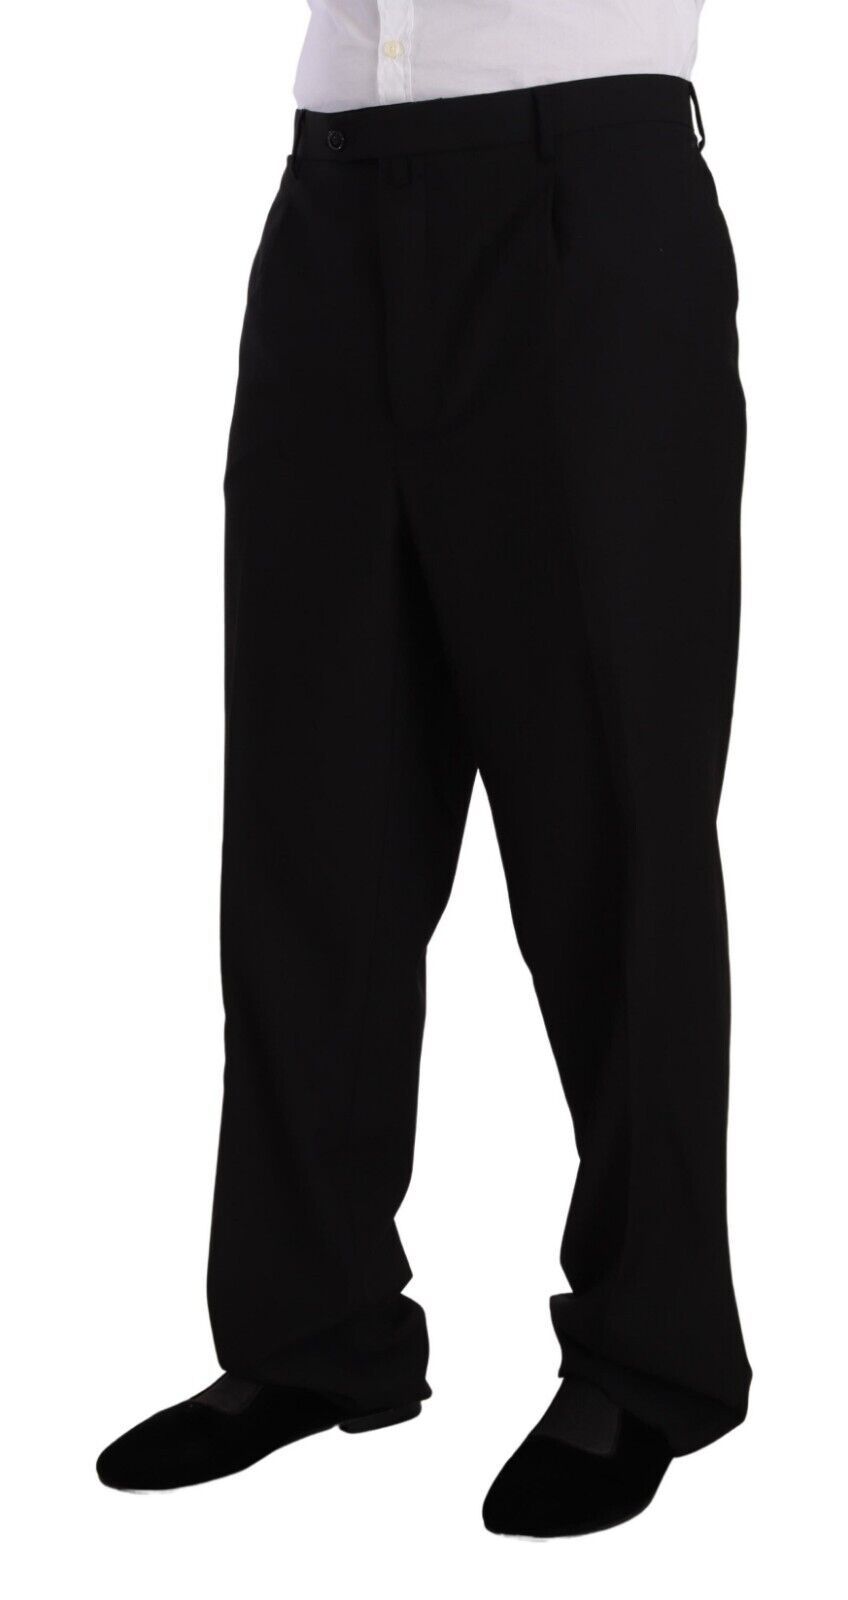 Domenico Tagliente Black Polyester Suit formel à poitrine simple